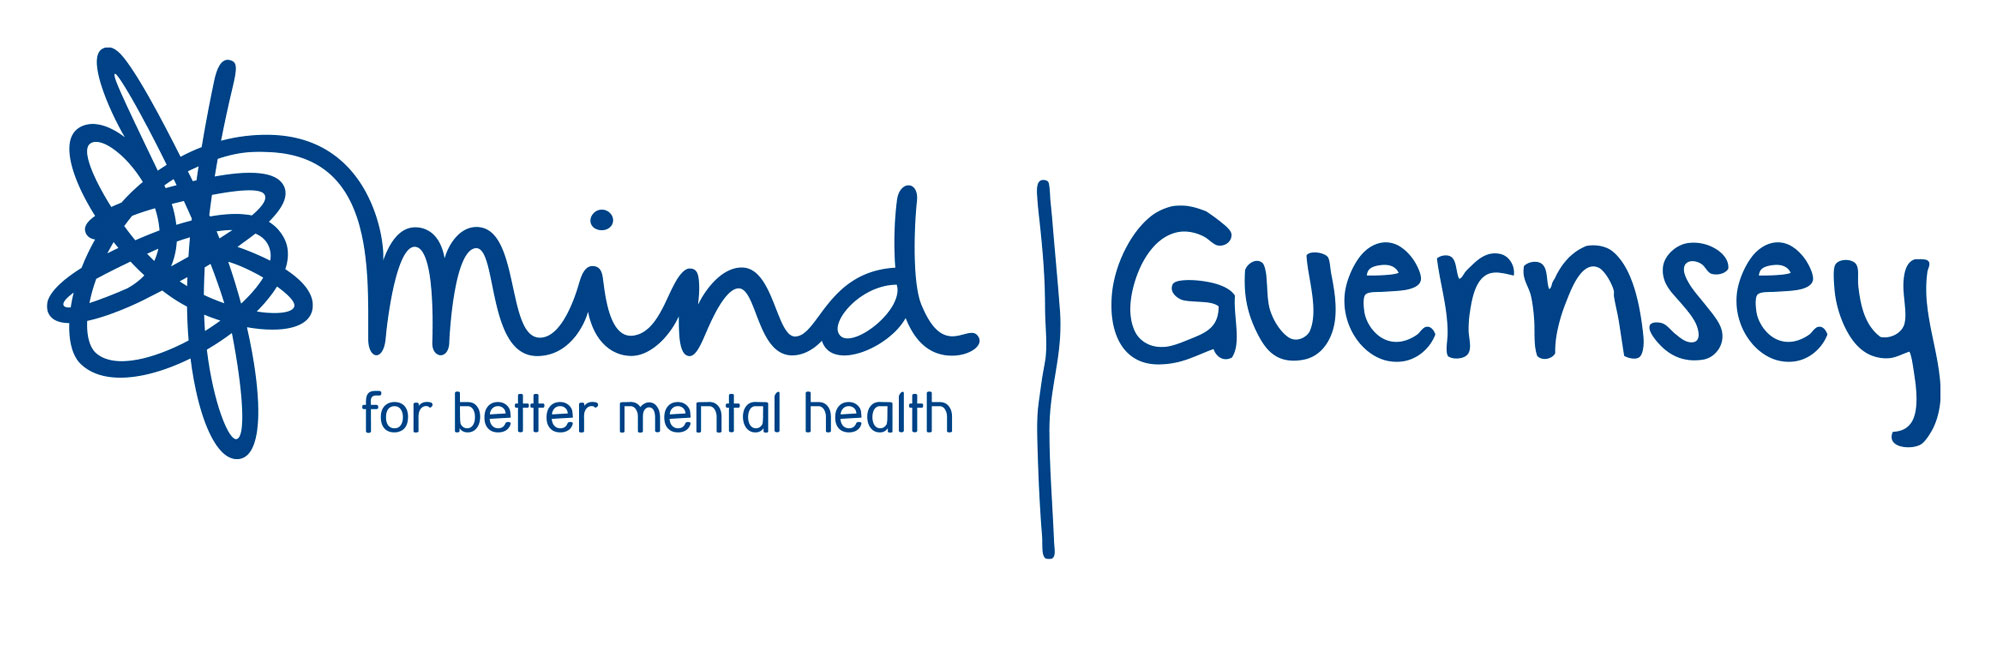 Charity mind guernsey logo